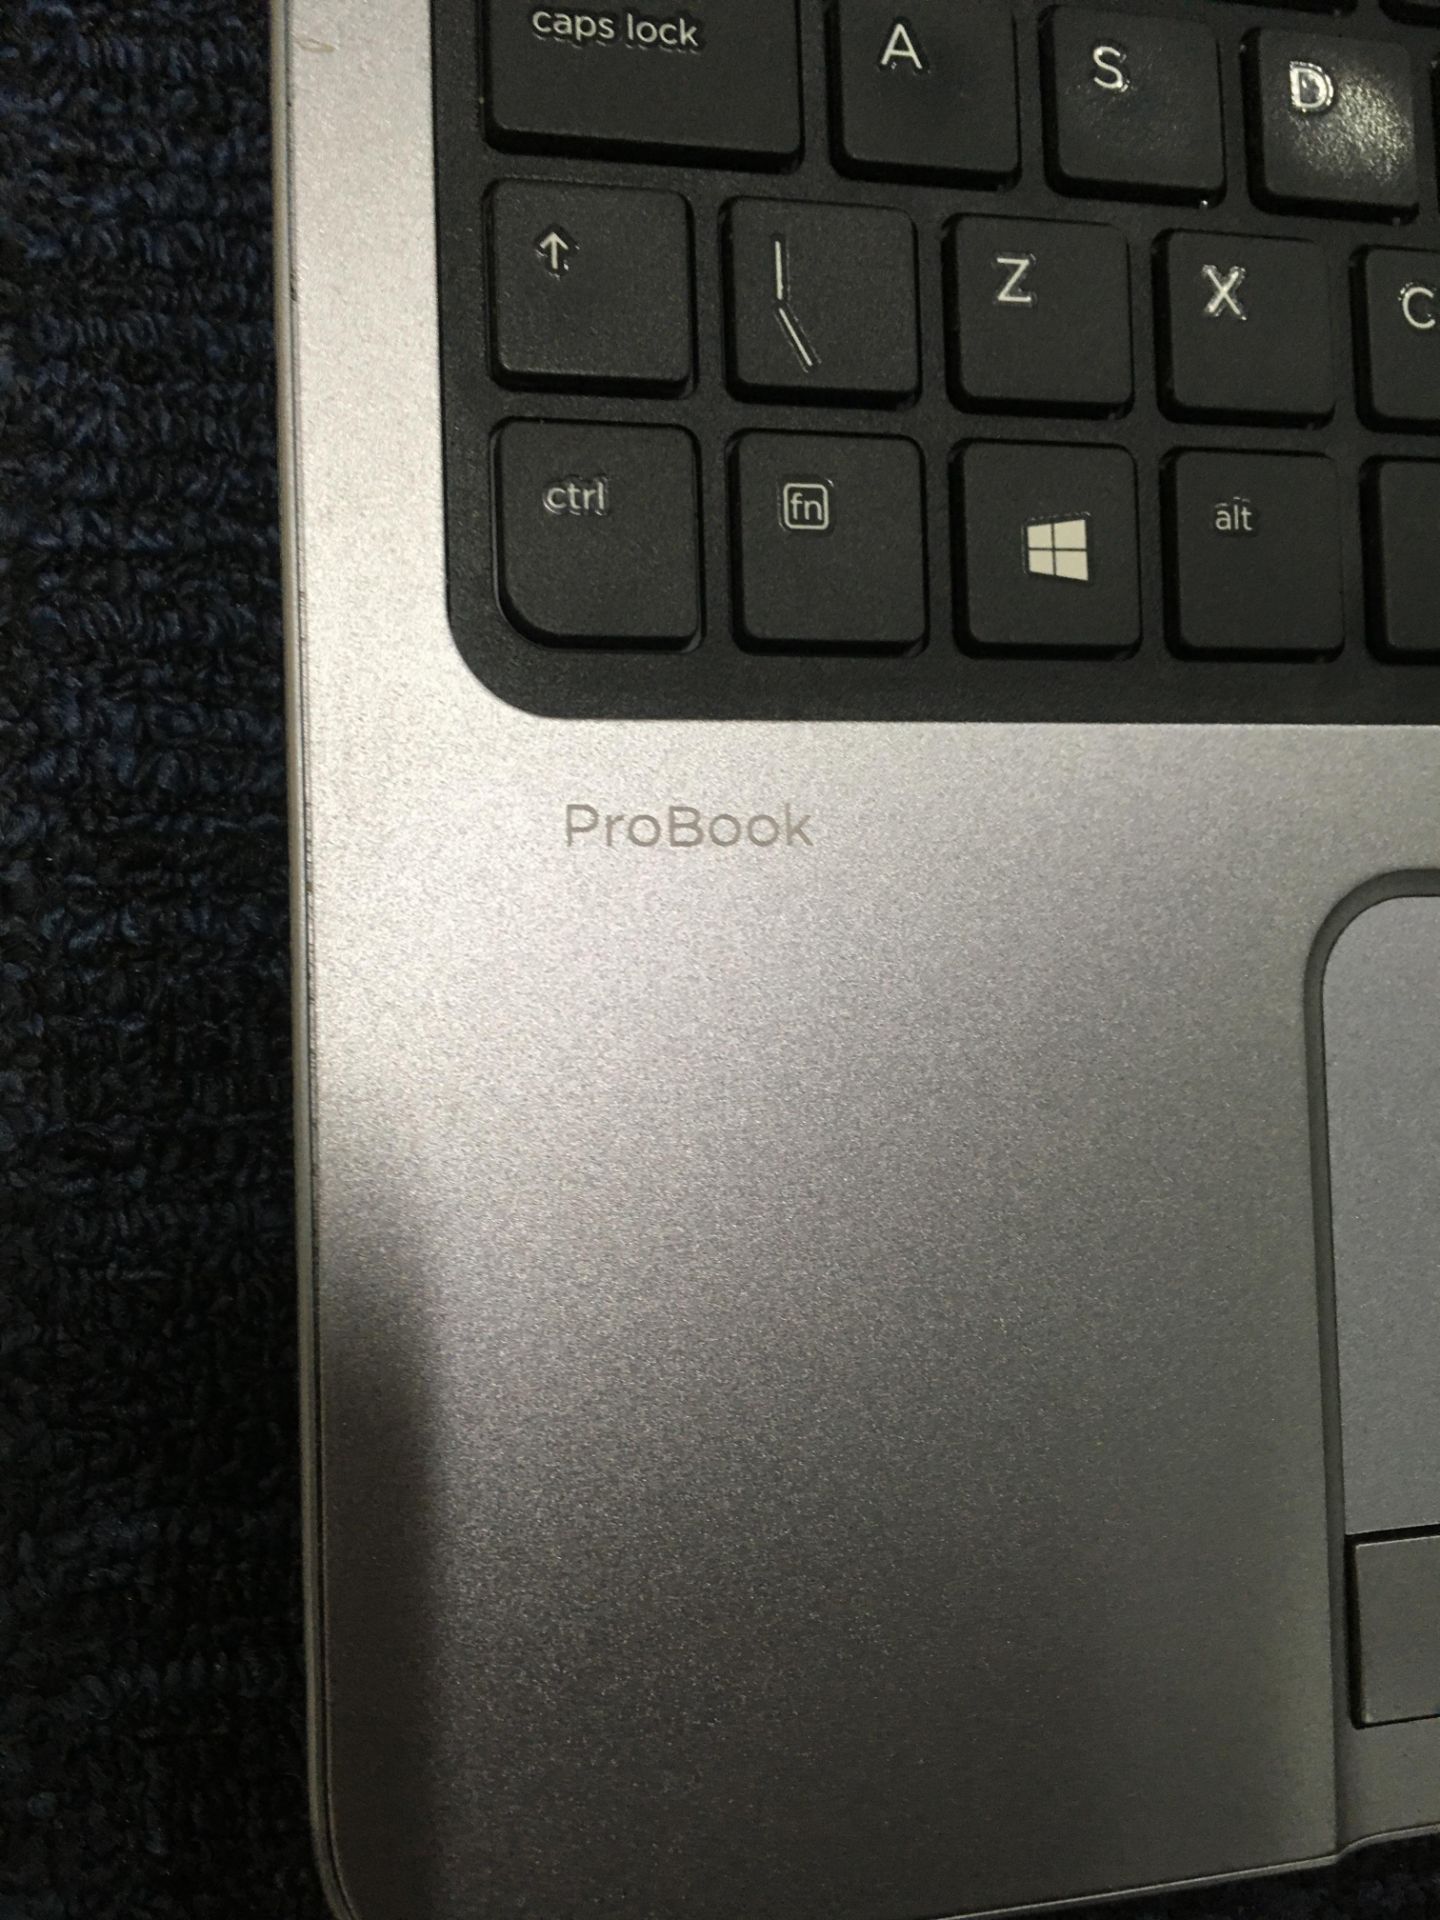 HP ProBook 450 core i5 blue label - Image 3 of 3